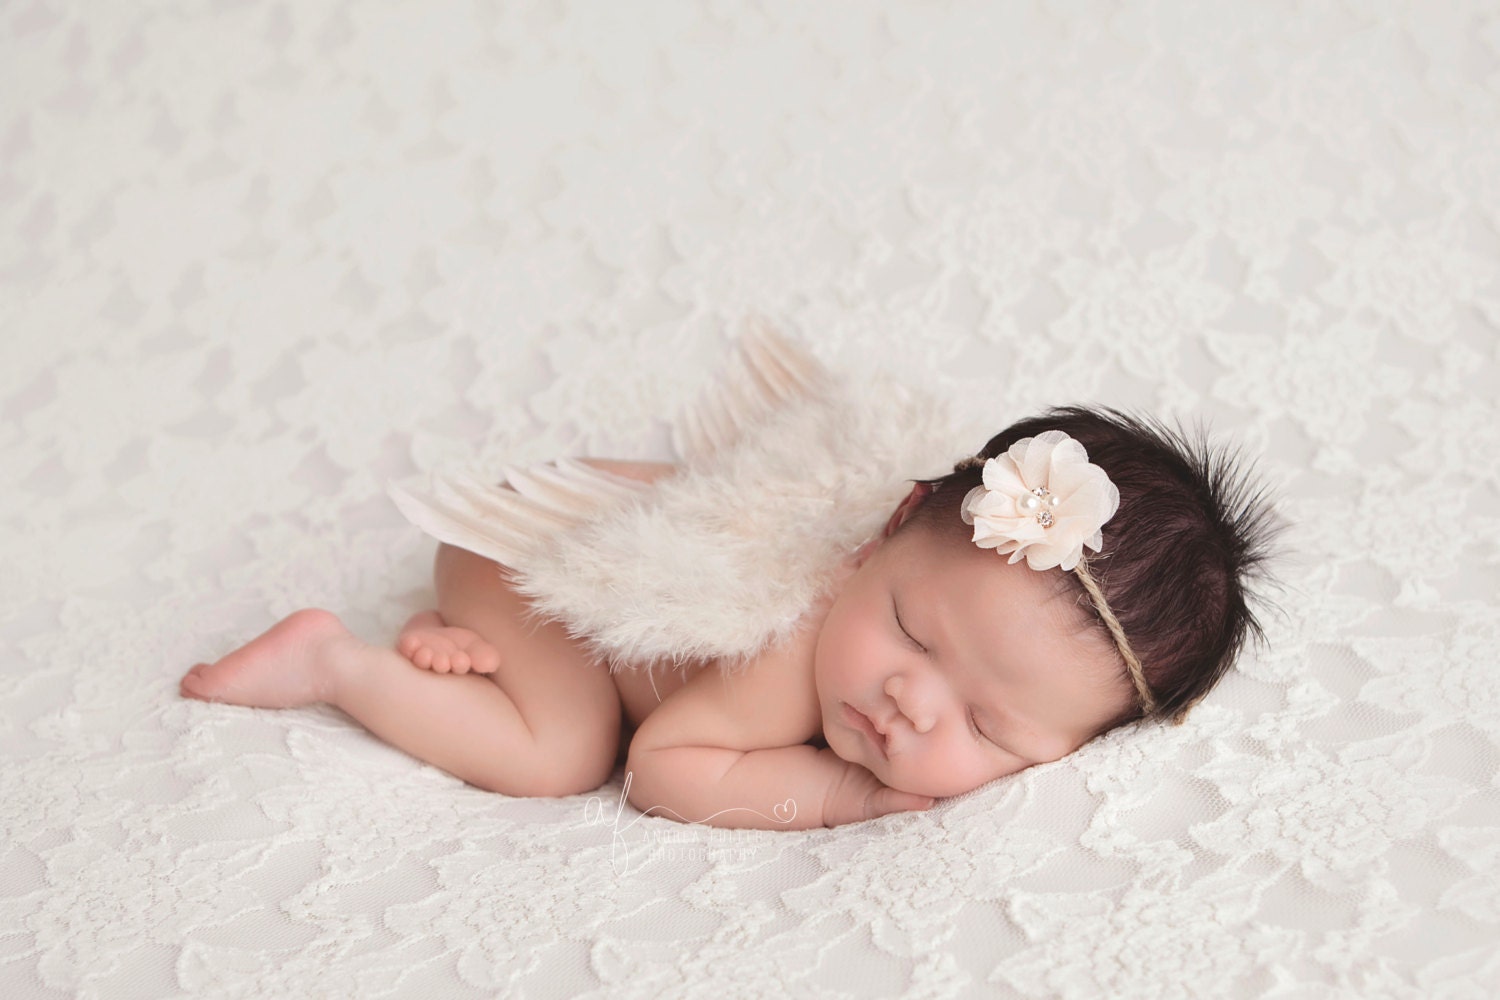 Ivory Baby Wing Set / Baby Angel Wing Set / Blush Tie Back / Angel Wings / Newborn Photo Prop / Newborn Wing / Newborn Angel Costume